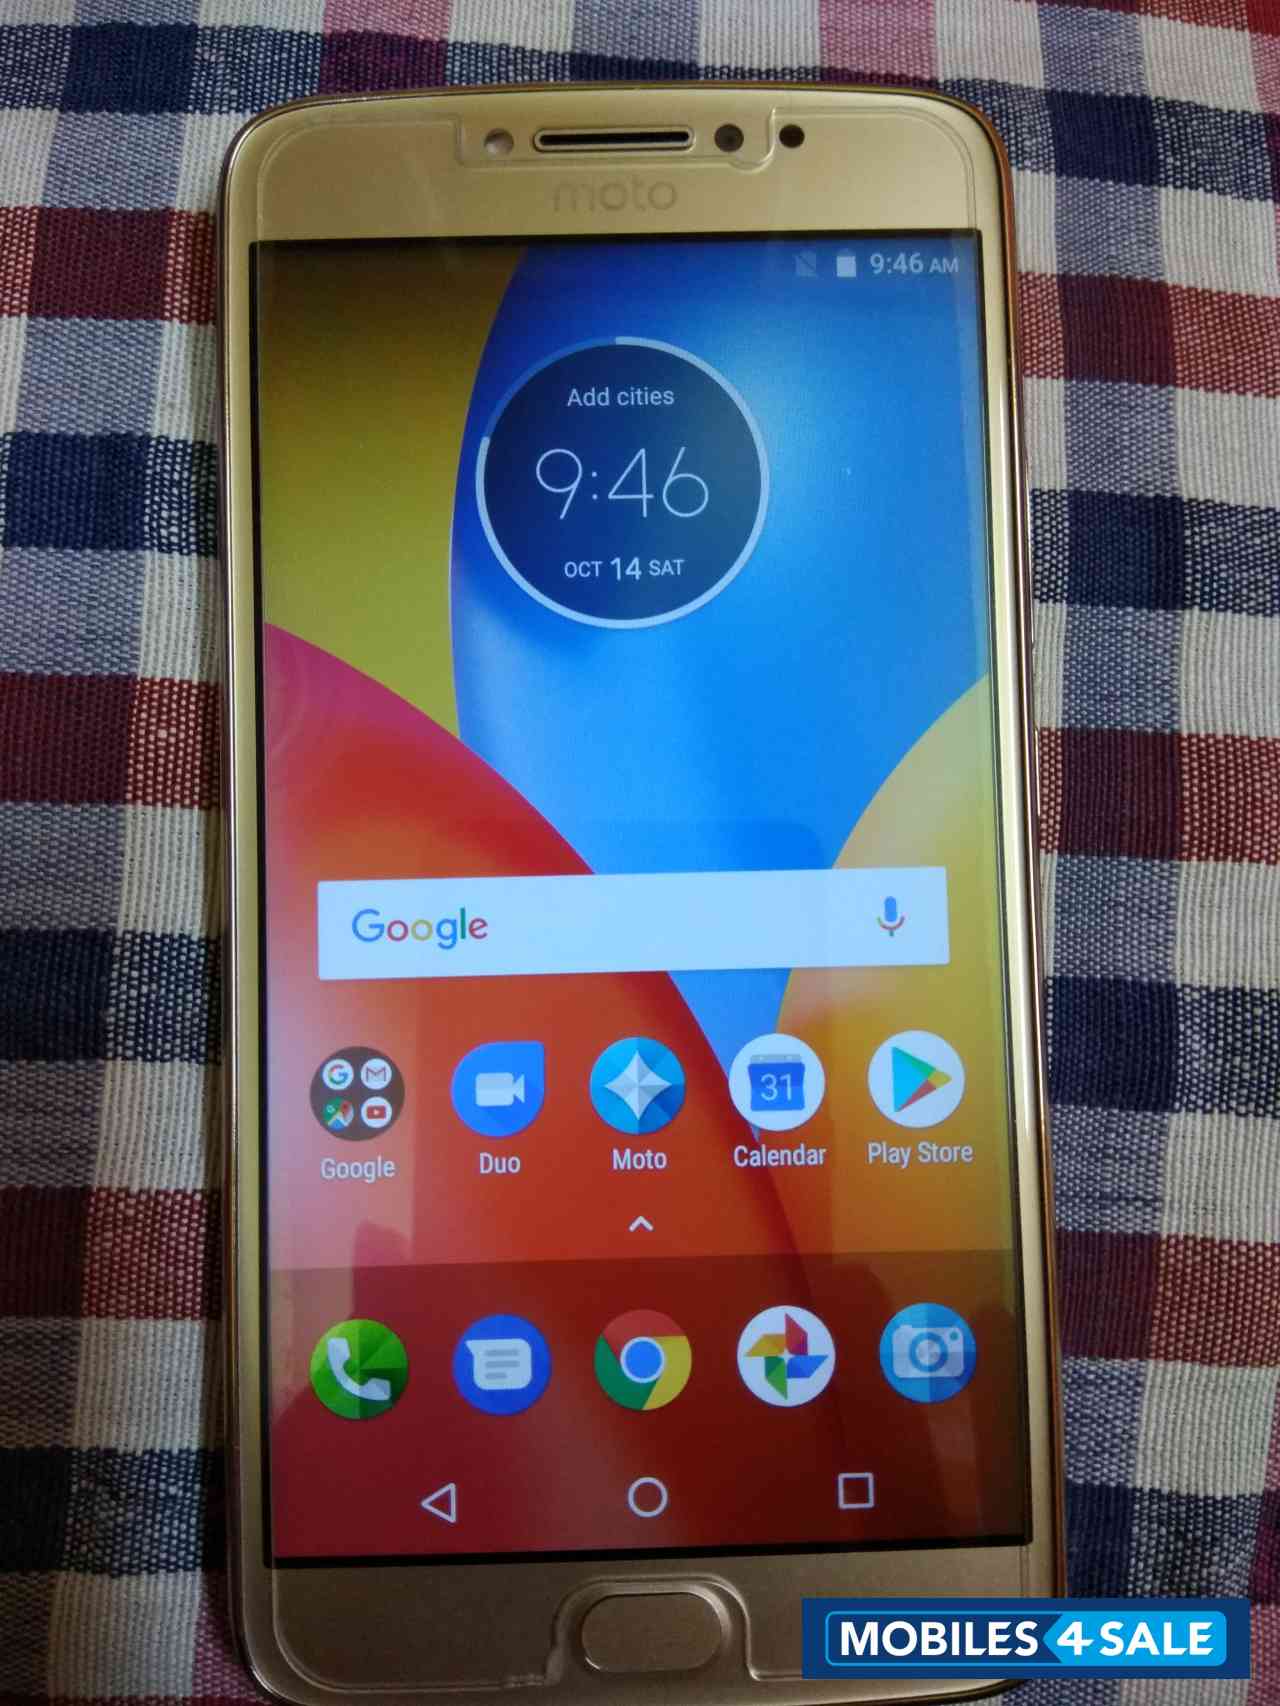 Gold Motorola Moto E4 Plus